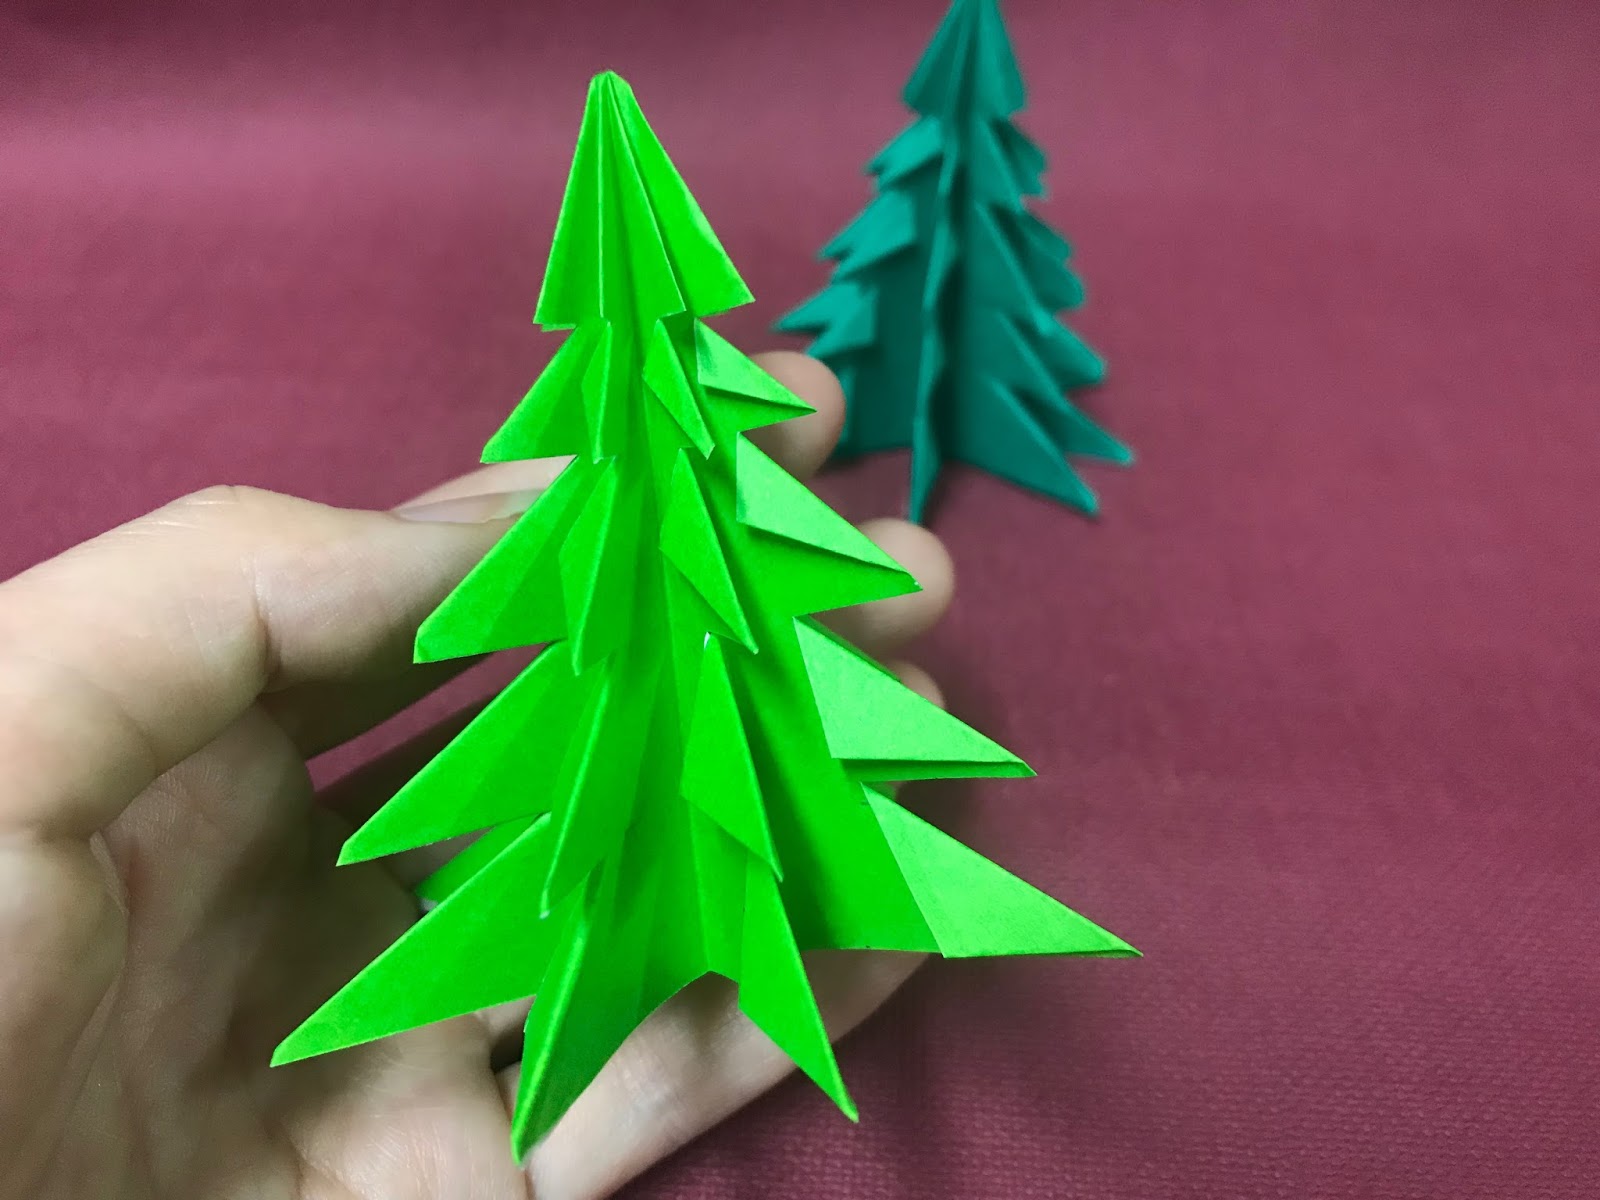 Origami Tree Craft